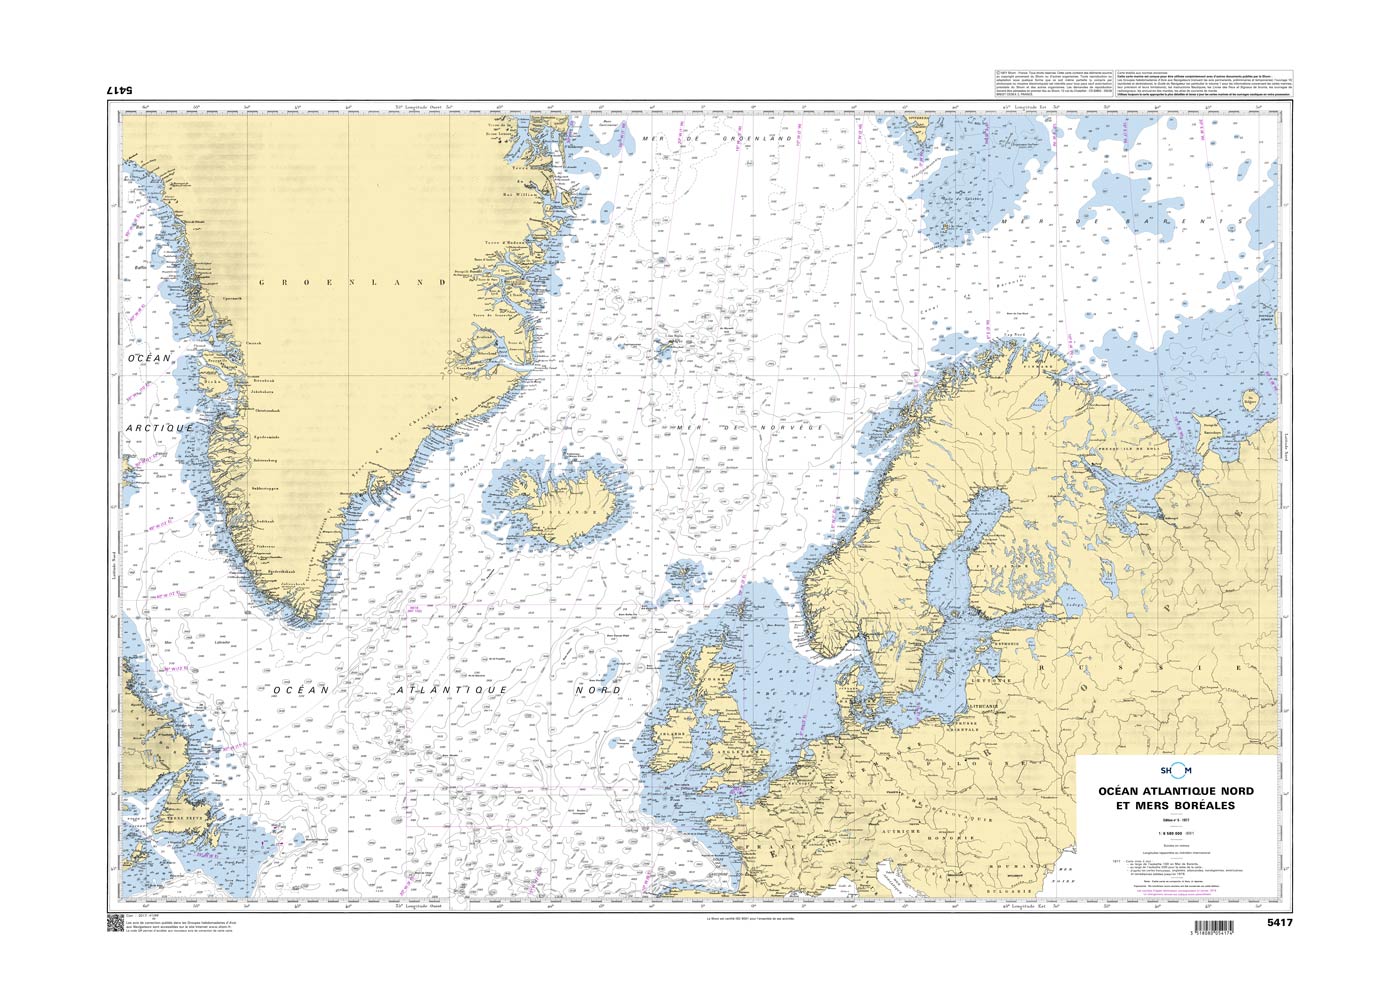 Shom 5417 - Océan Atlantique Nord et mers boréales